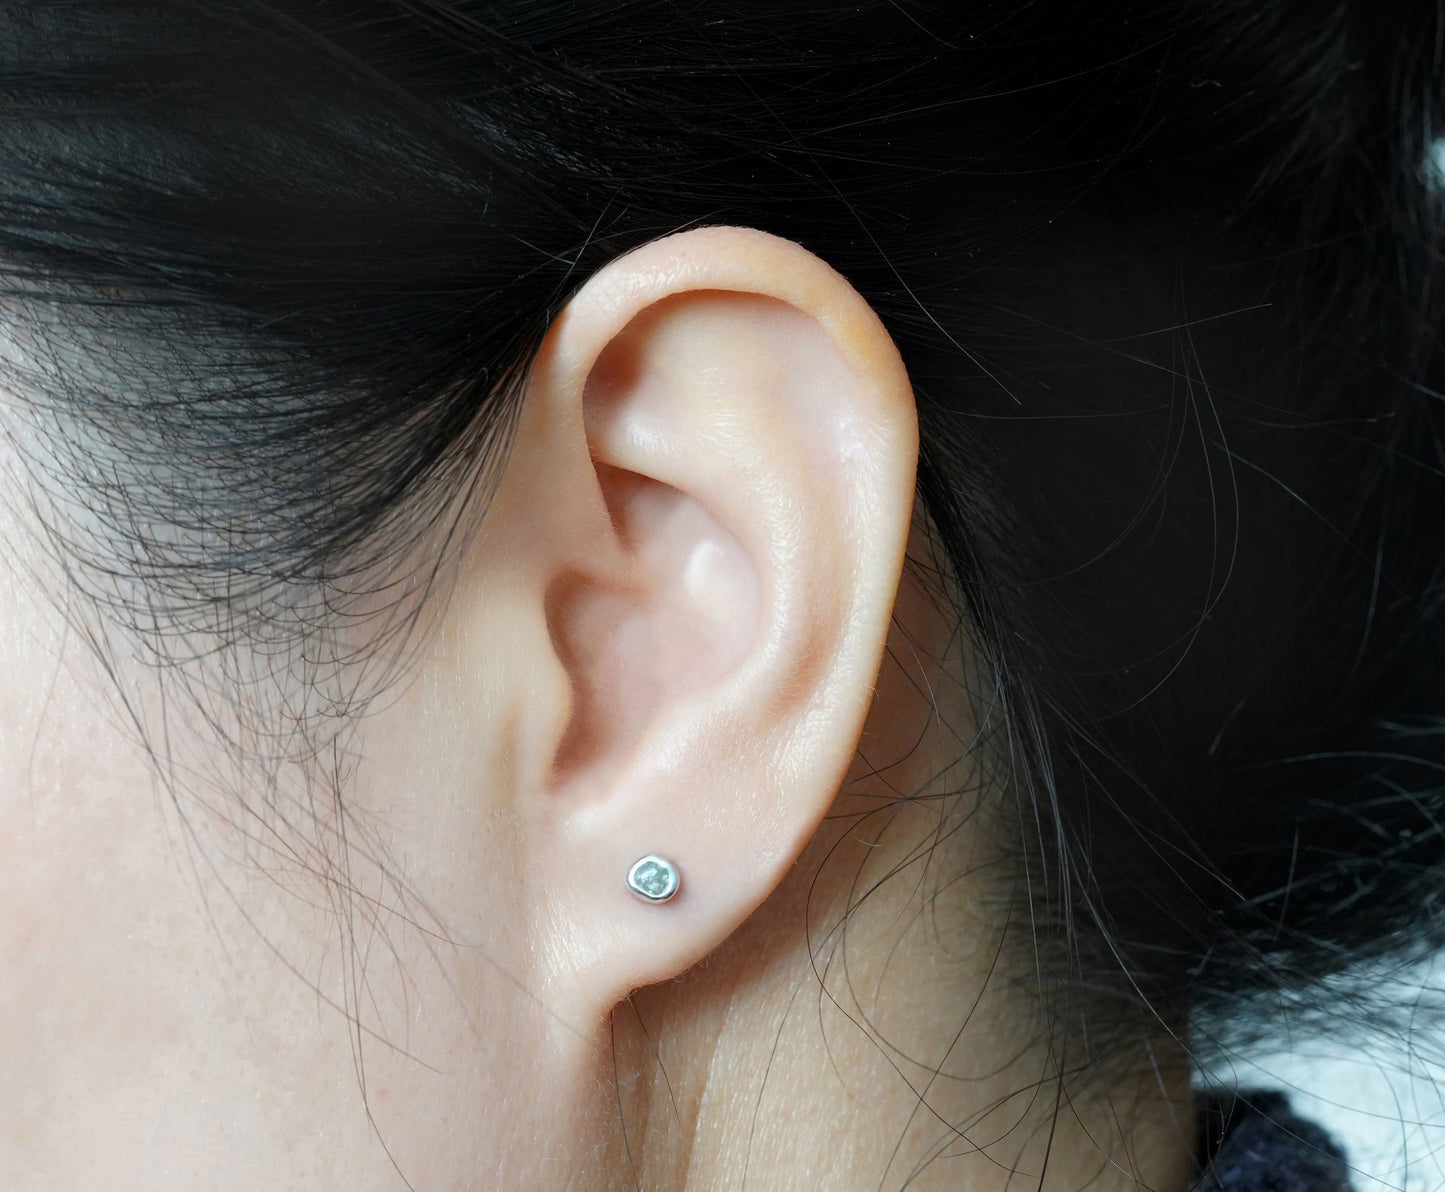 0.85ct Rough Diamond Stud Earrings, Natural Grey Diamond Studs, Raw Diamond Ear Posts